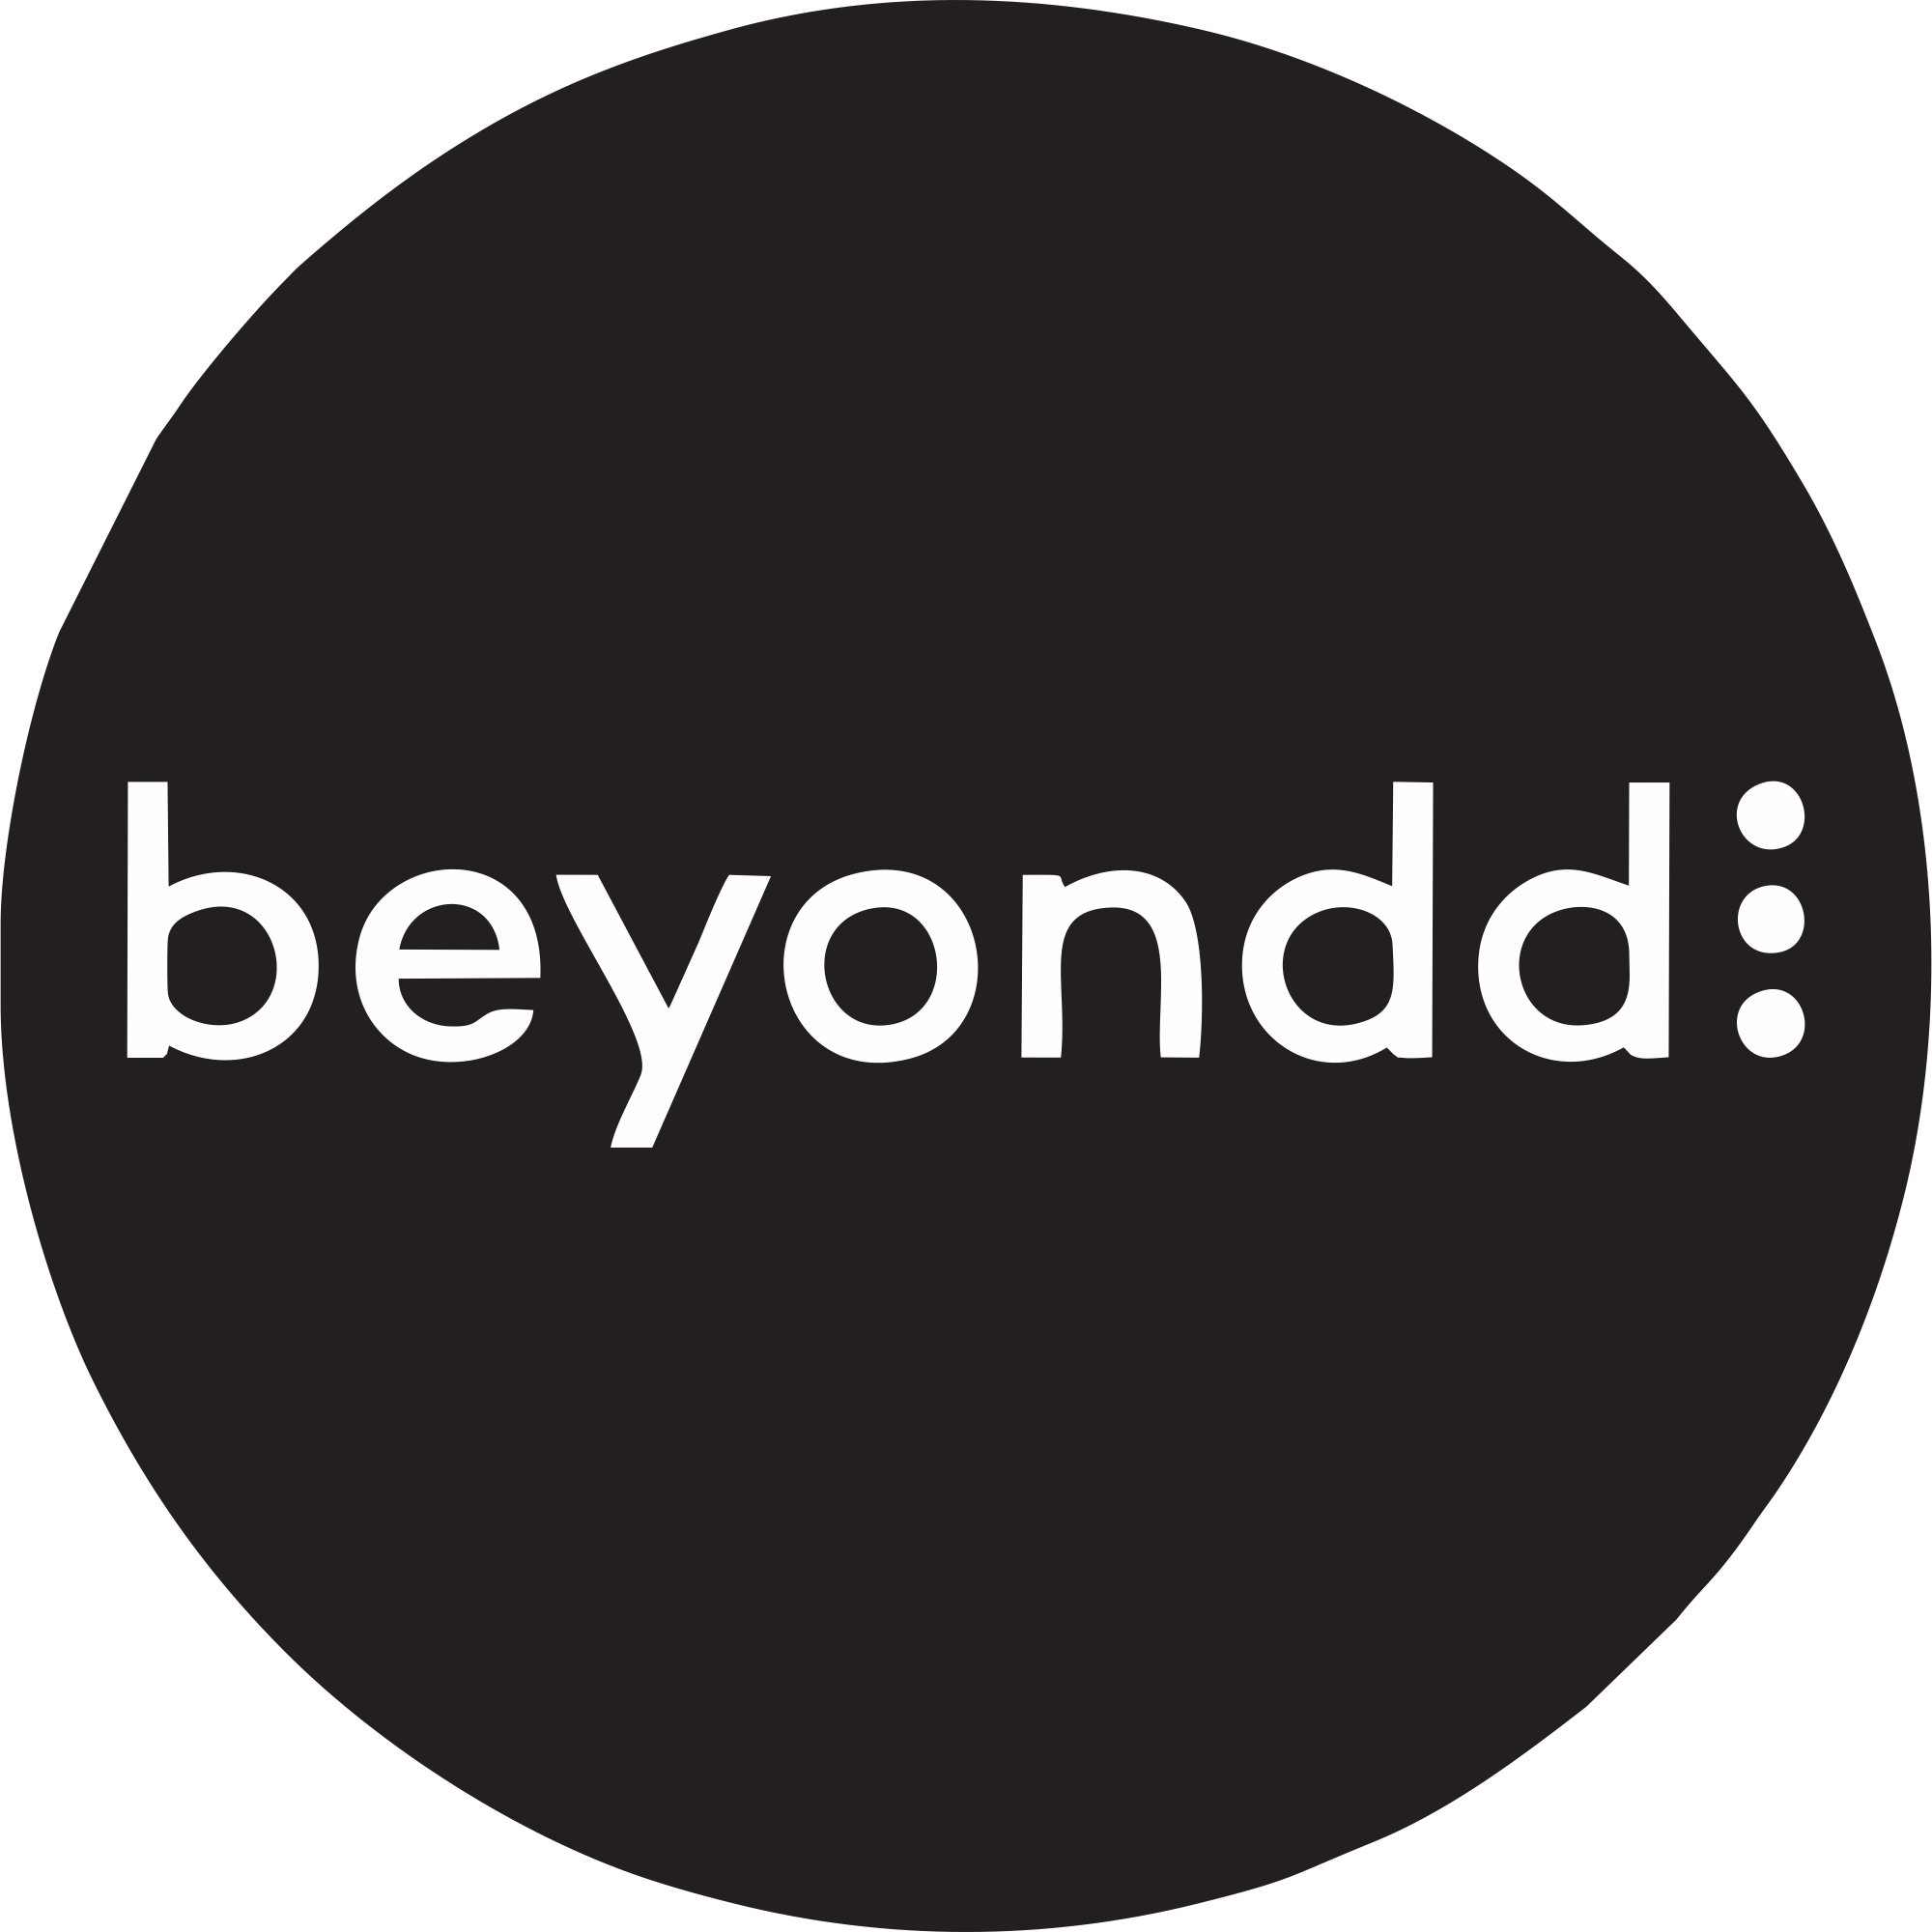 beyondd-logo-round2